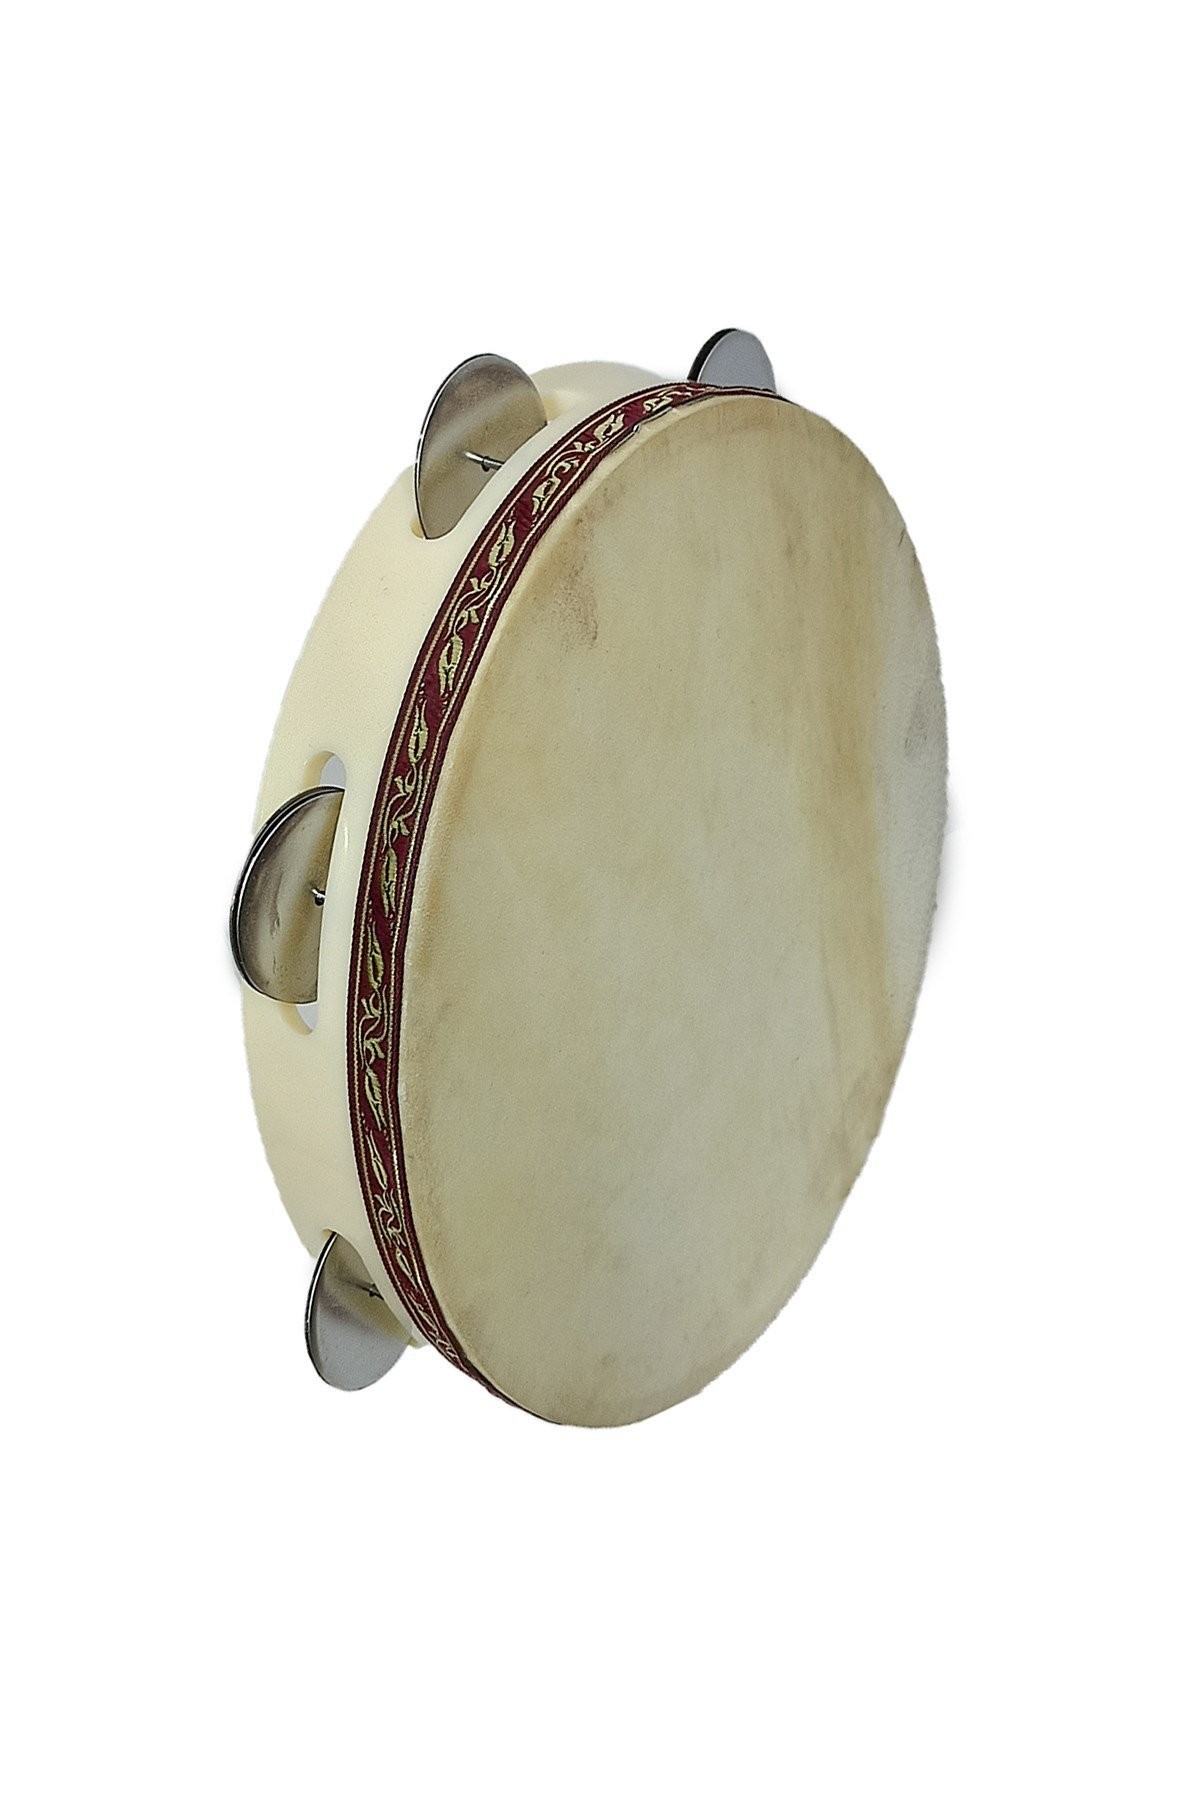 Leather Cymbal Tambourine